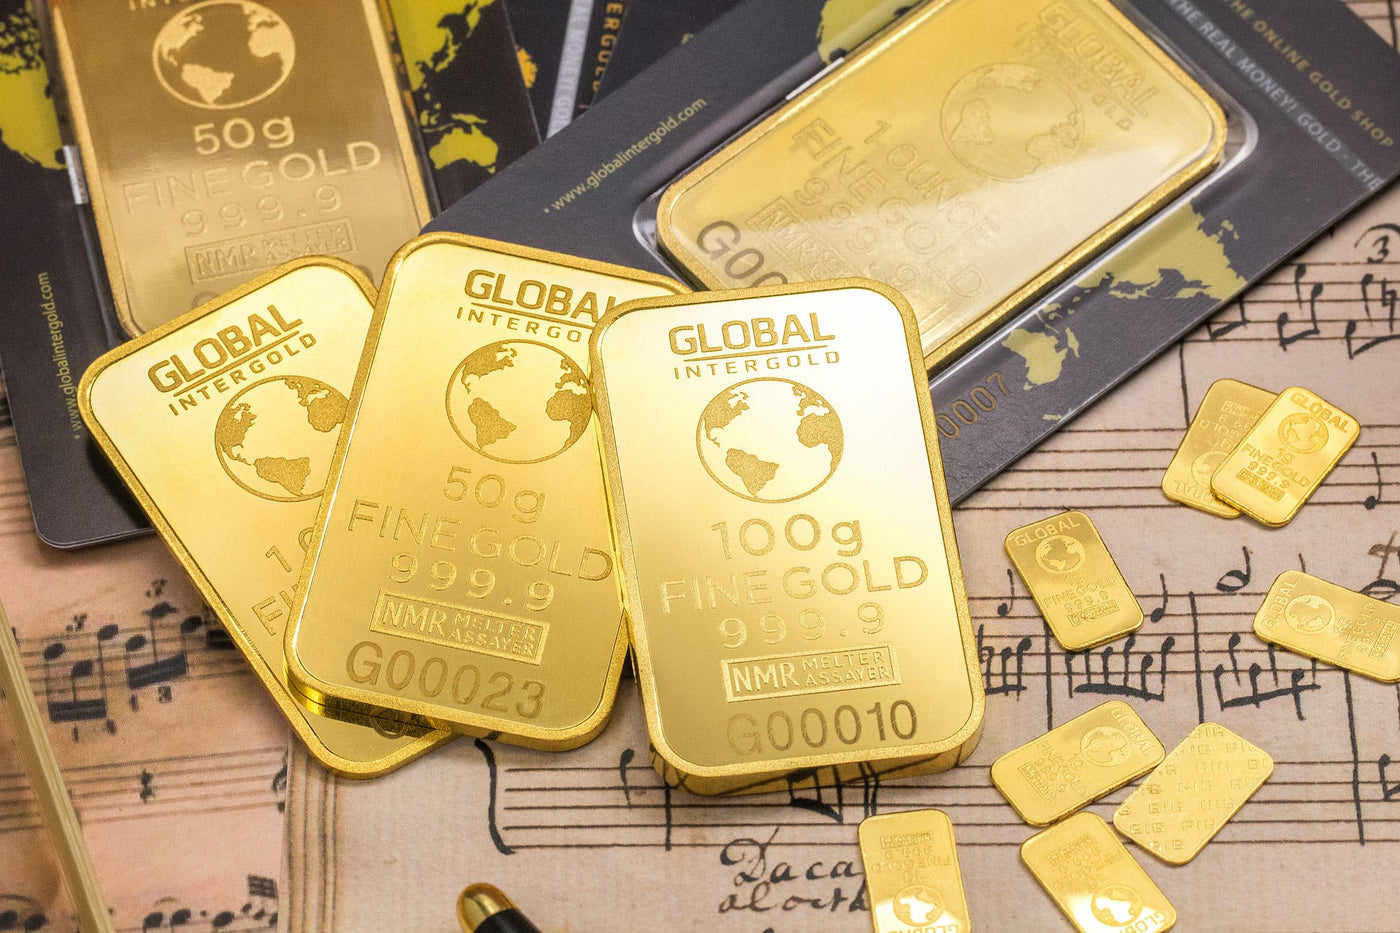 Gold bullion 100g